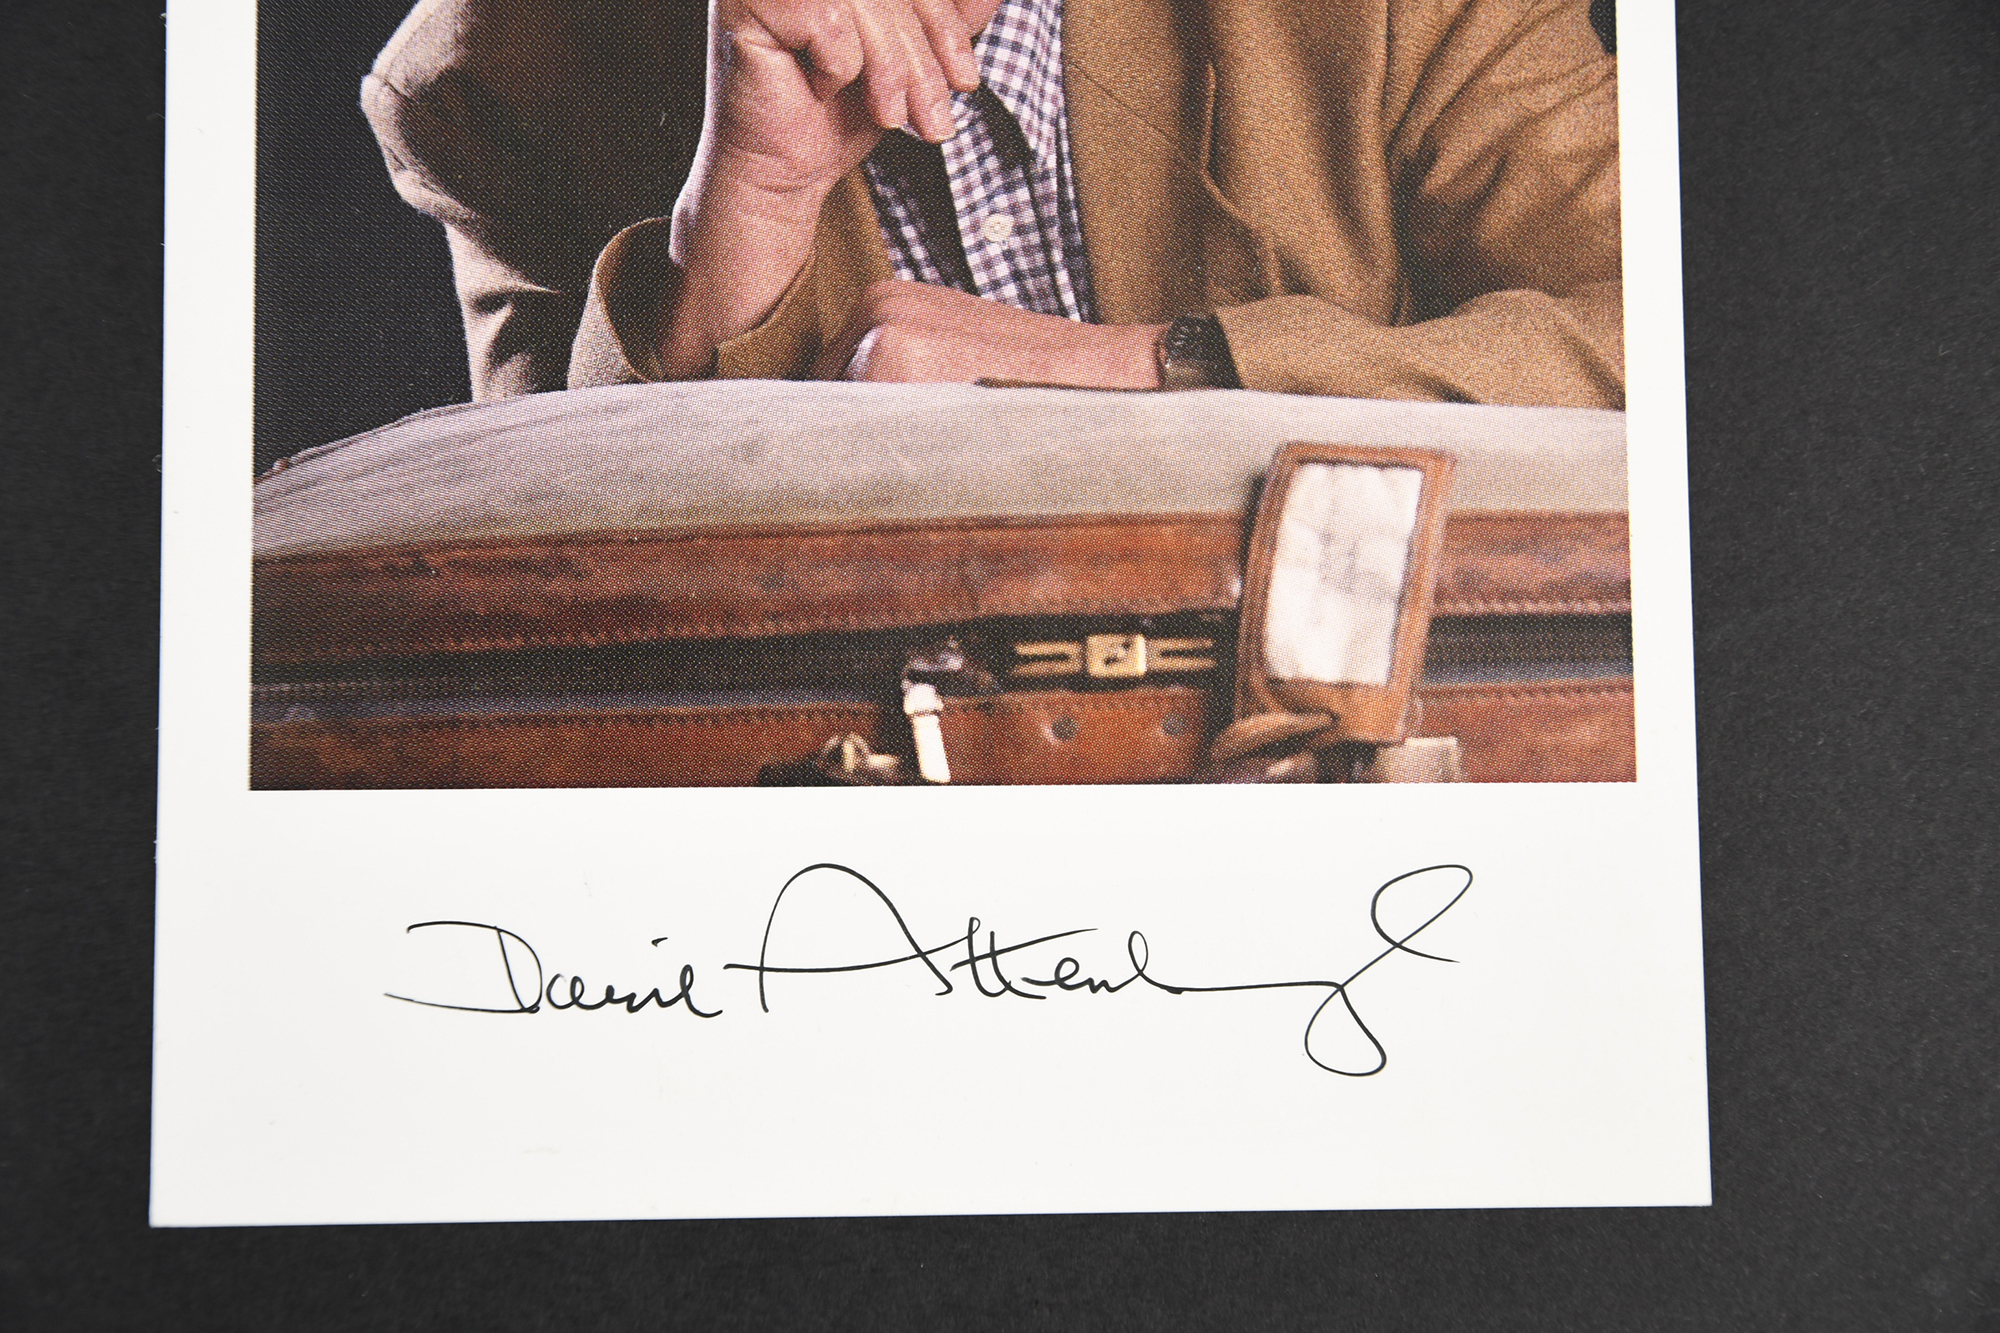 David Attenborough (1926 - ) Original Signature on photograph - Image 2 of 2